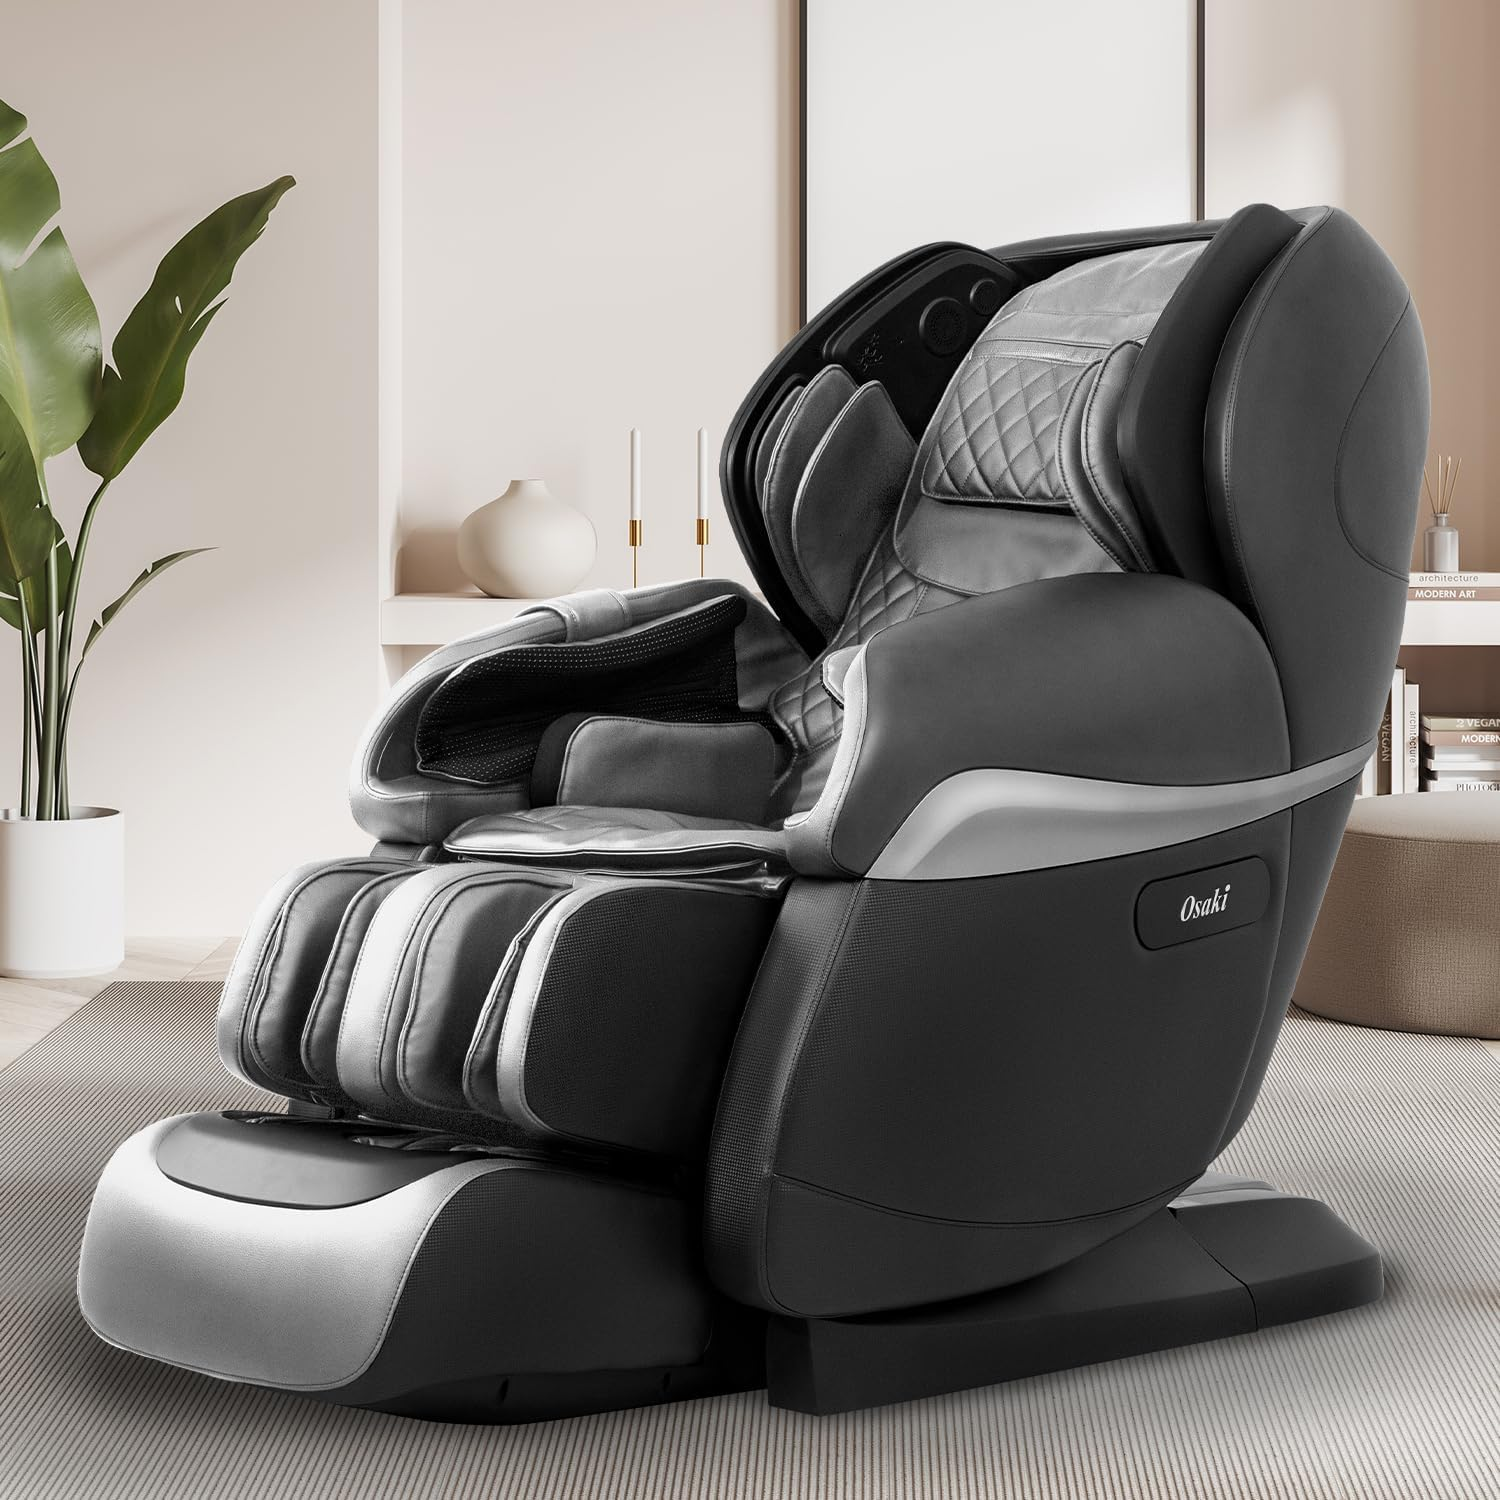 Osaki Pro OS-4D Paragon Massage Chair - Best Japanese Massage Chairs